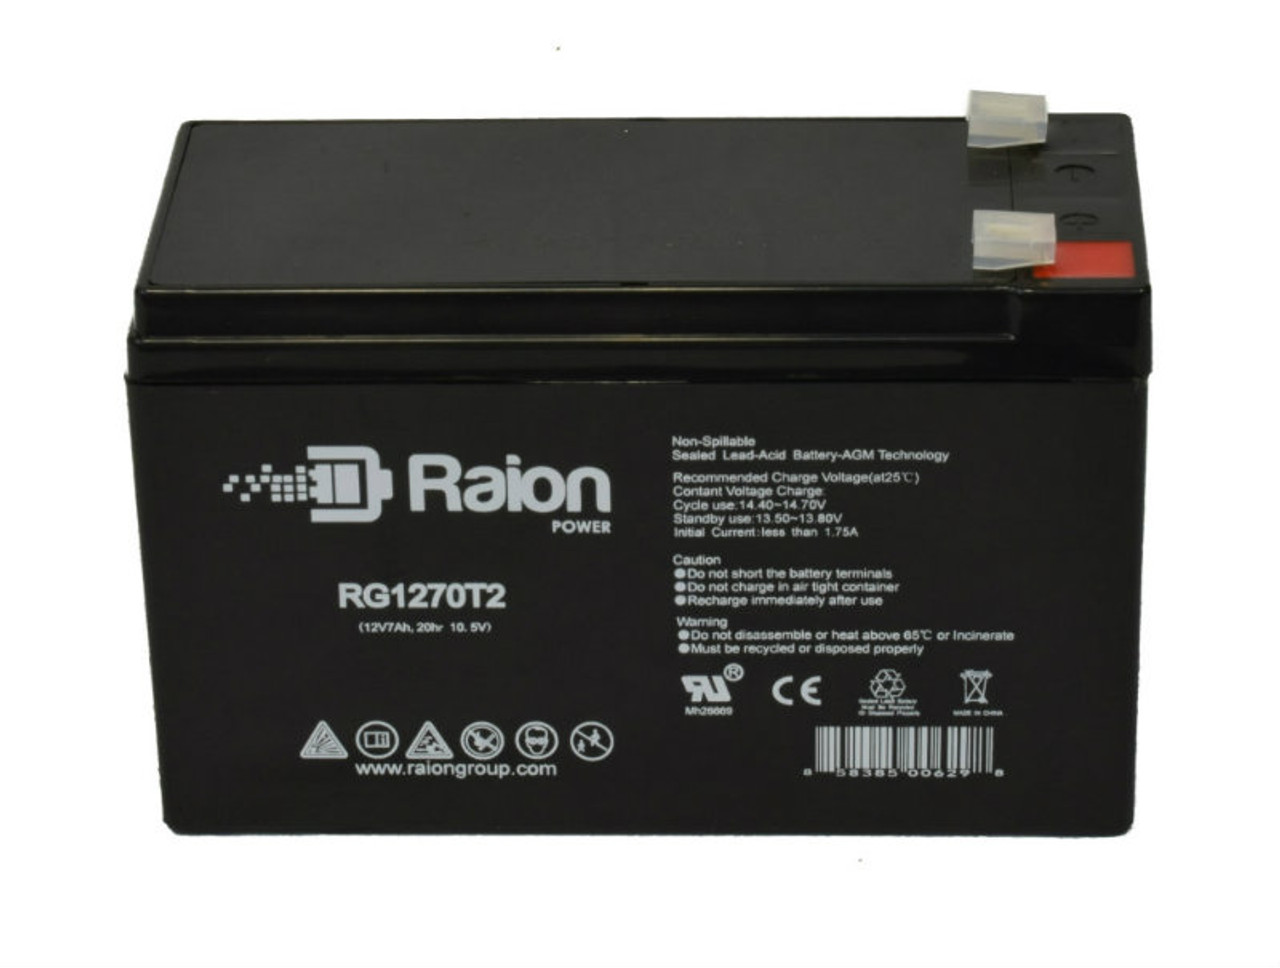 Raion Power RG1270T2 12V 7Ah Lead Acid Battery for Match Mate iSam